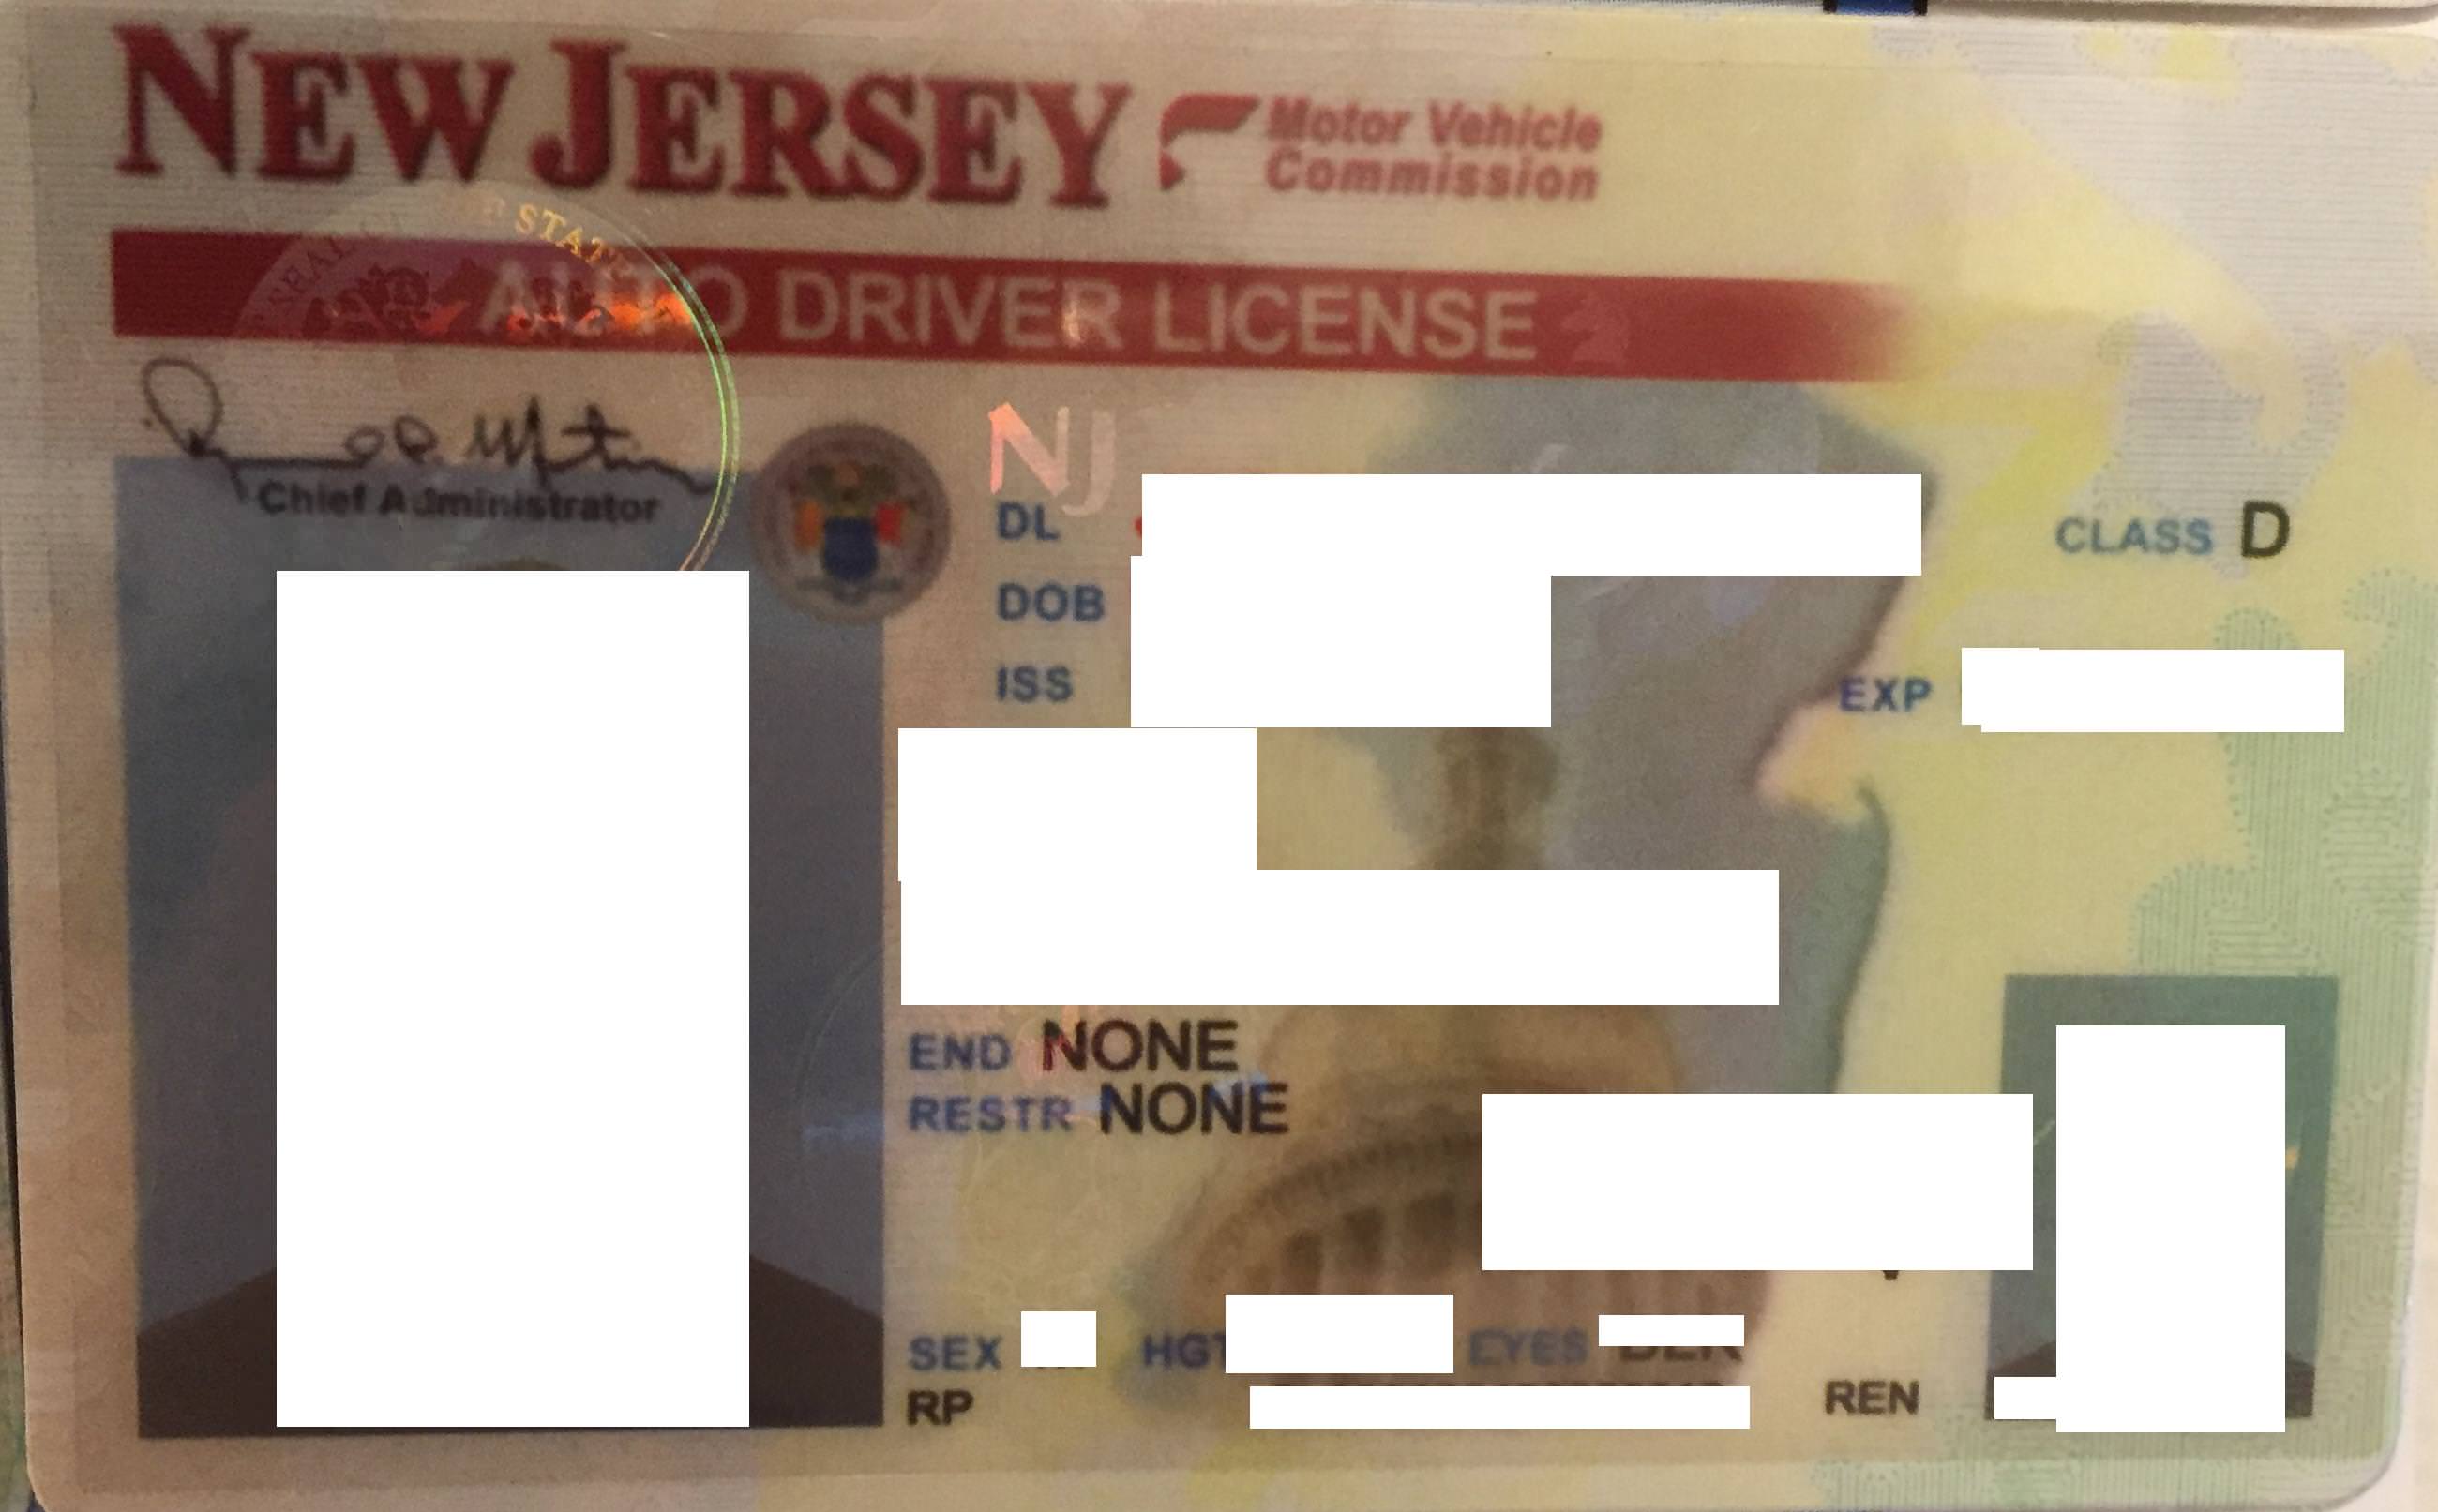 License ended